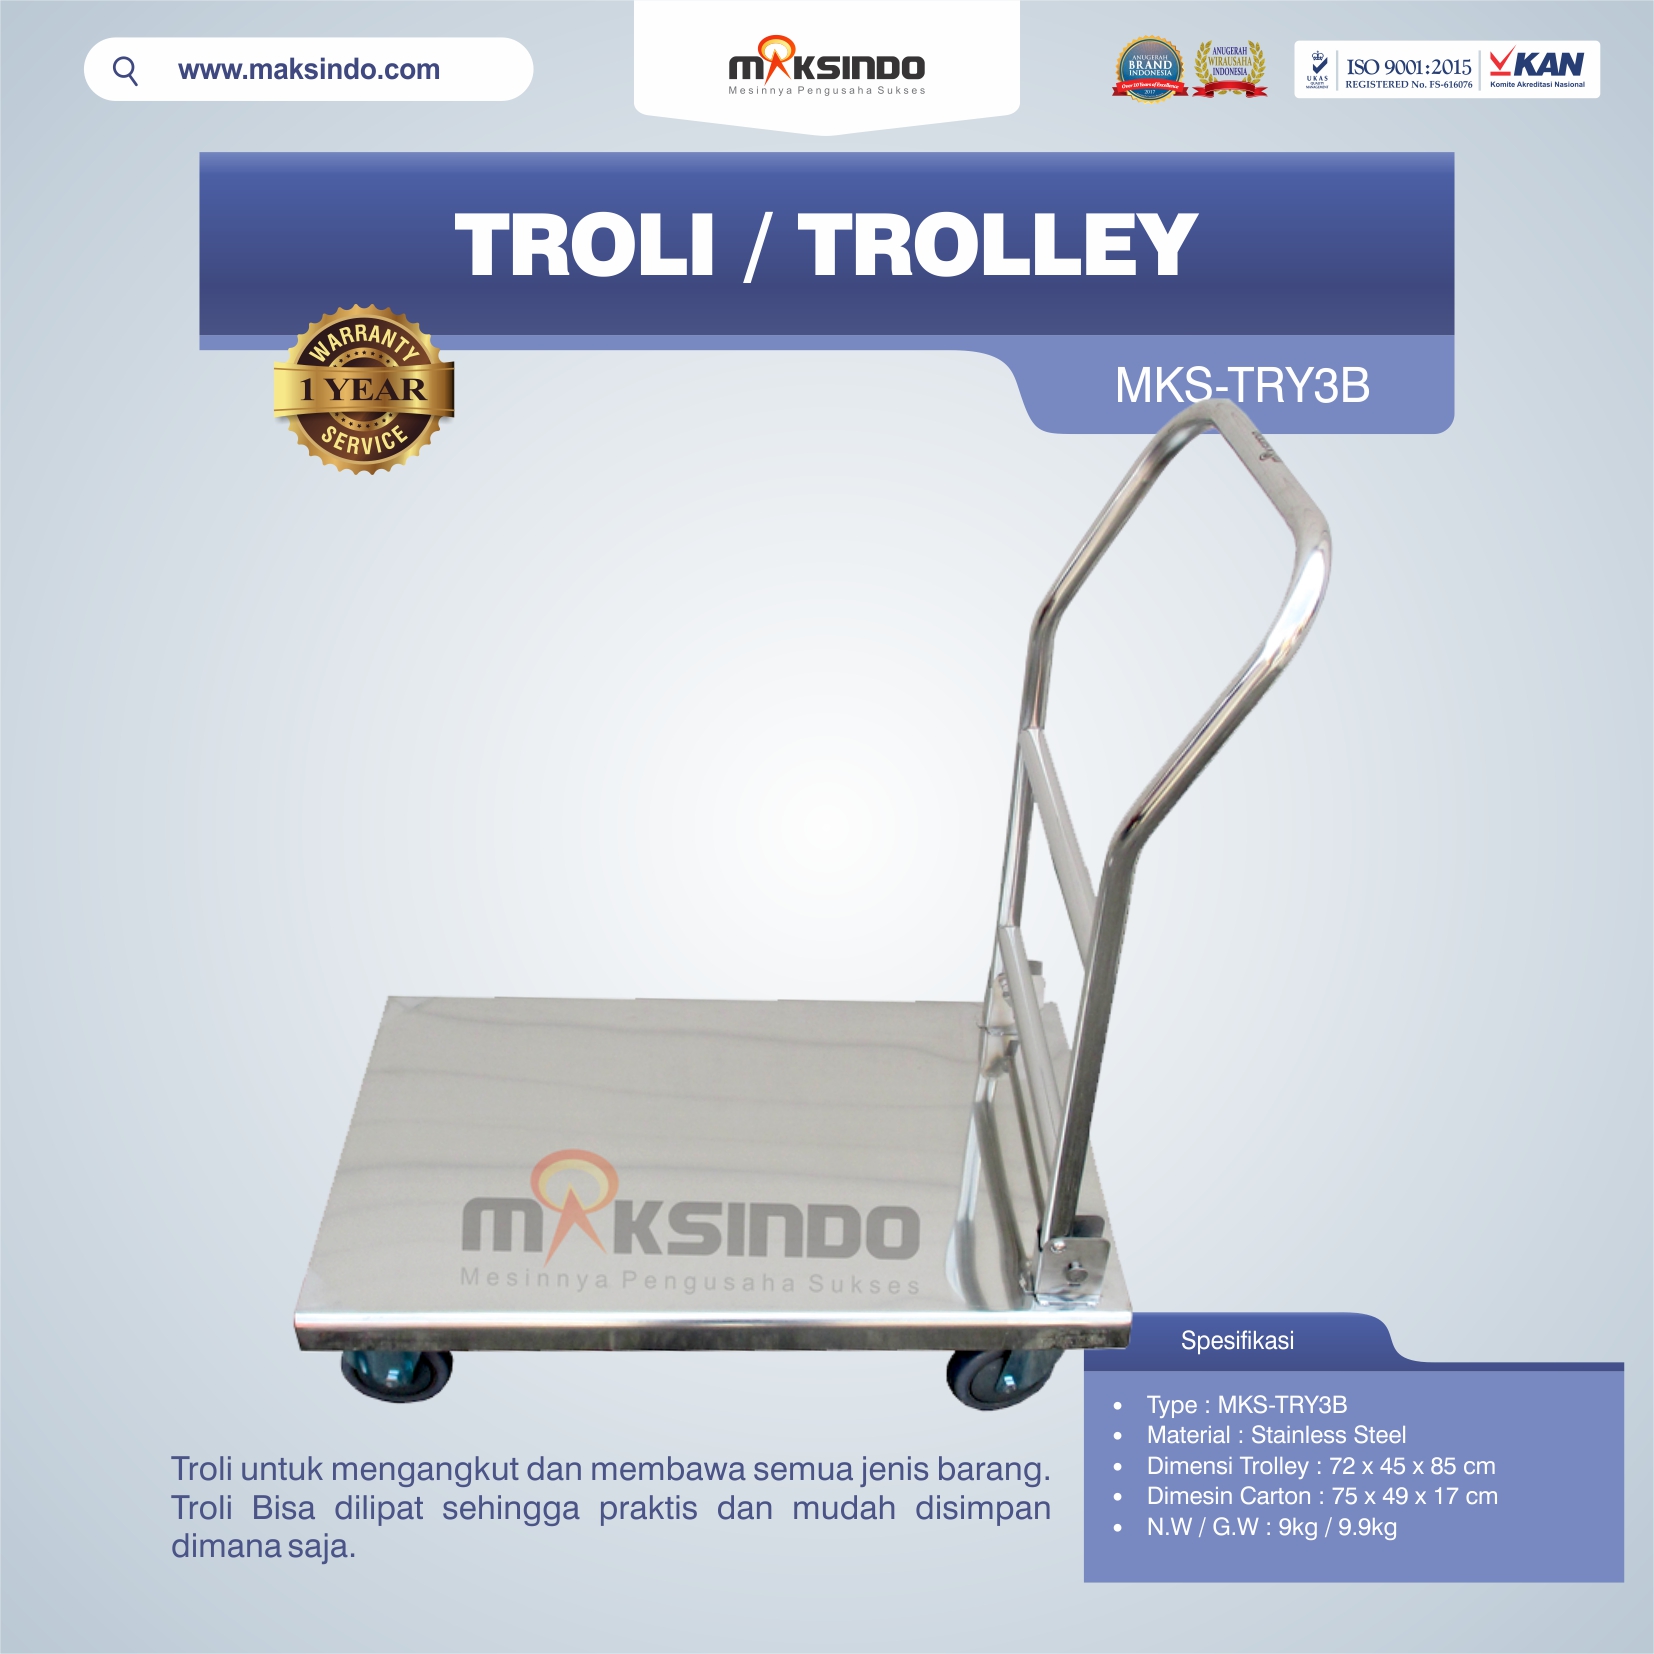 Jual Troli/Trolley MKS-TRY3B di Malang